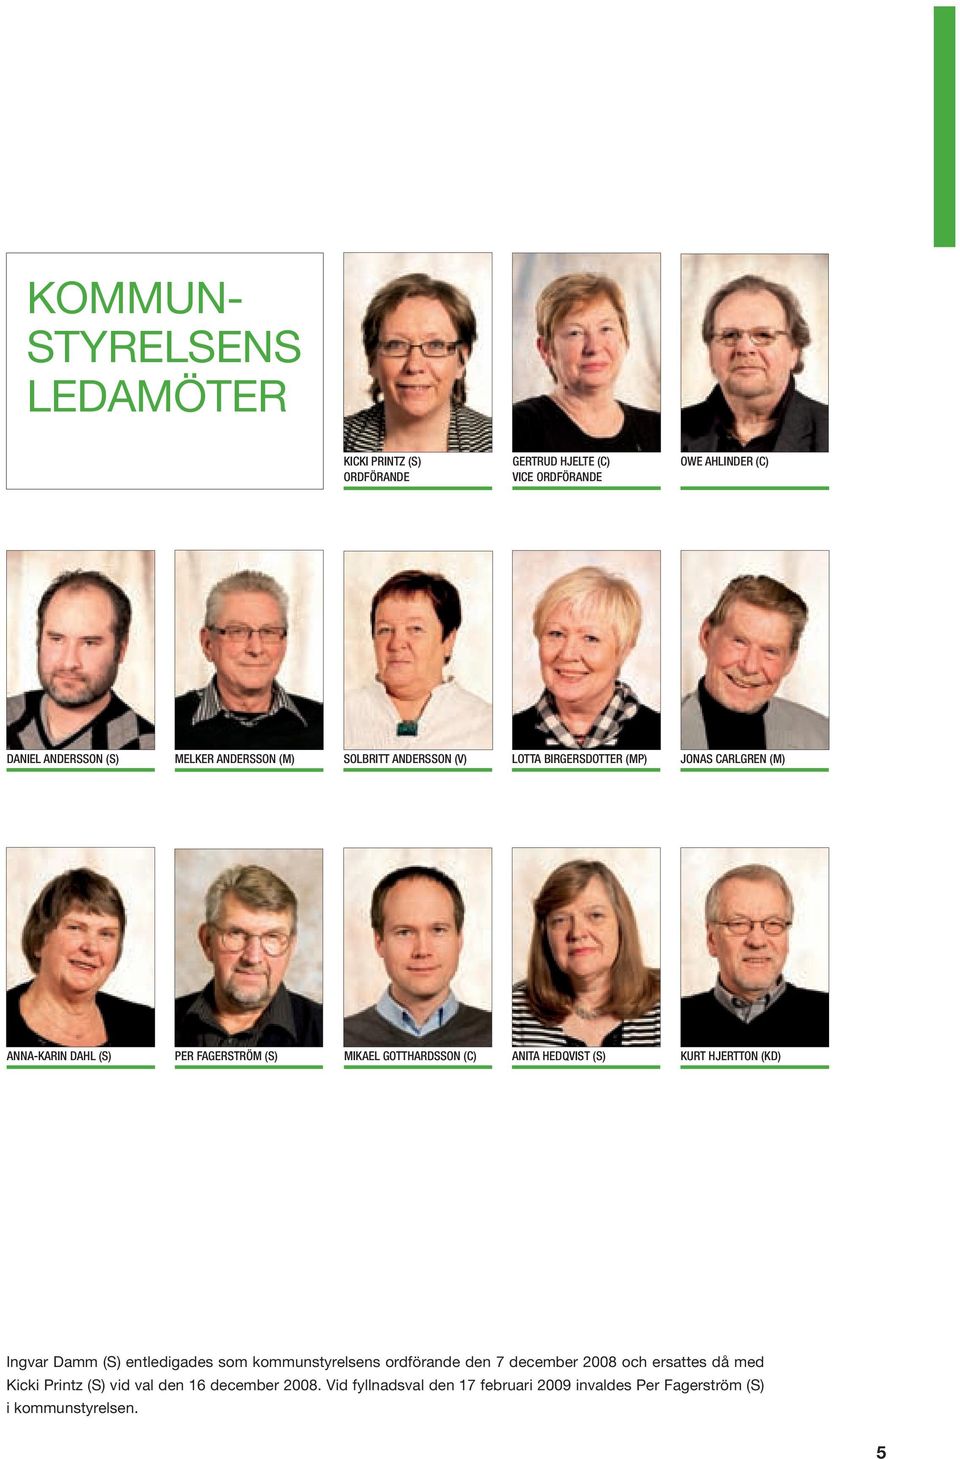 Gotthardsson (C) Anita Hedqvist (S) Kurt Hjertton (KD) Ingvar Damm (S) entledigades som kommunstyrelsens ordförande den 7 december 2008